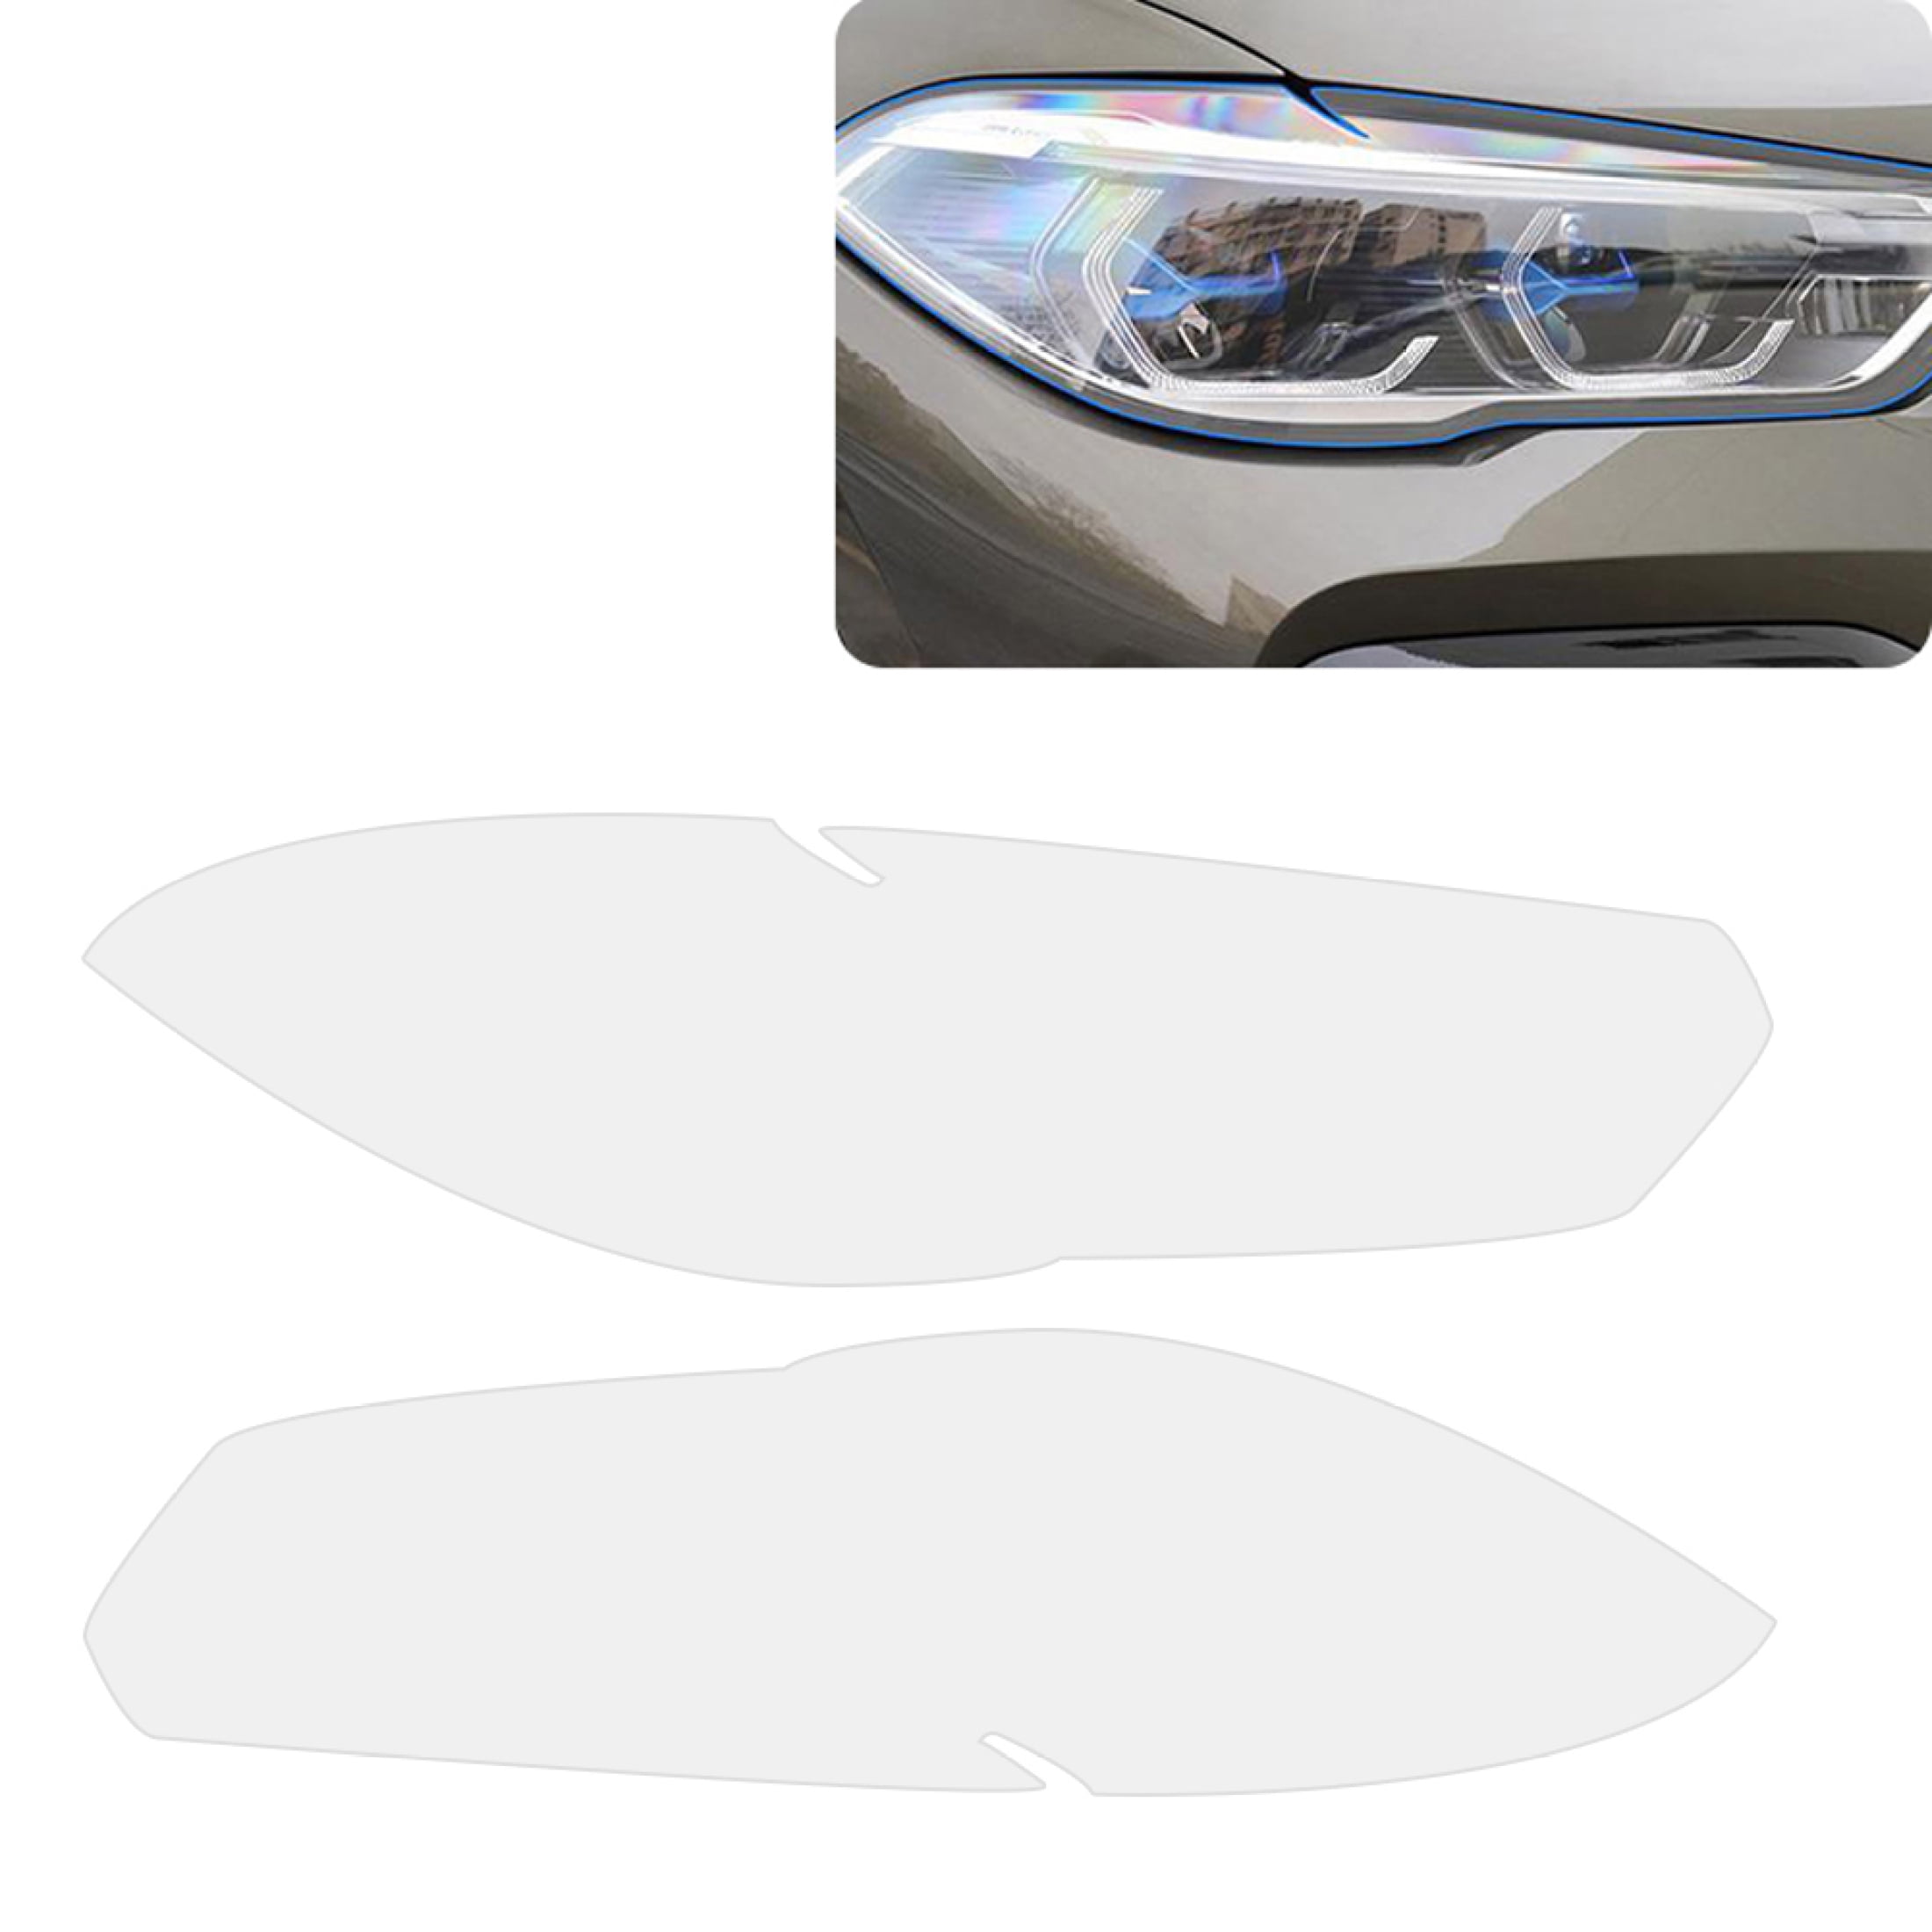 MoreChioce Car Headlight Film TPU Transparent Protective Film Car  Accessories Decoration for X6 2020-2022 Transparent